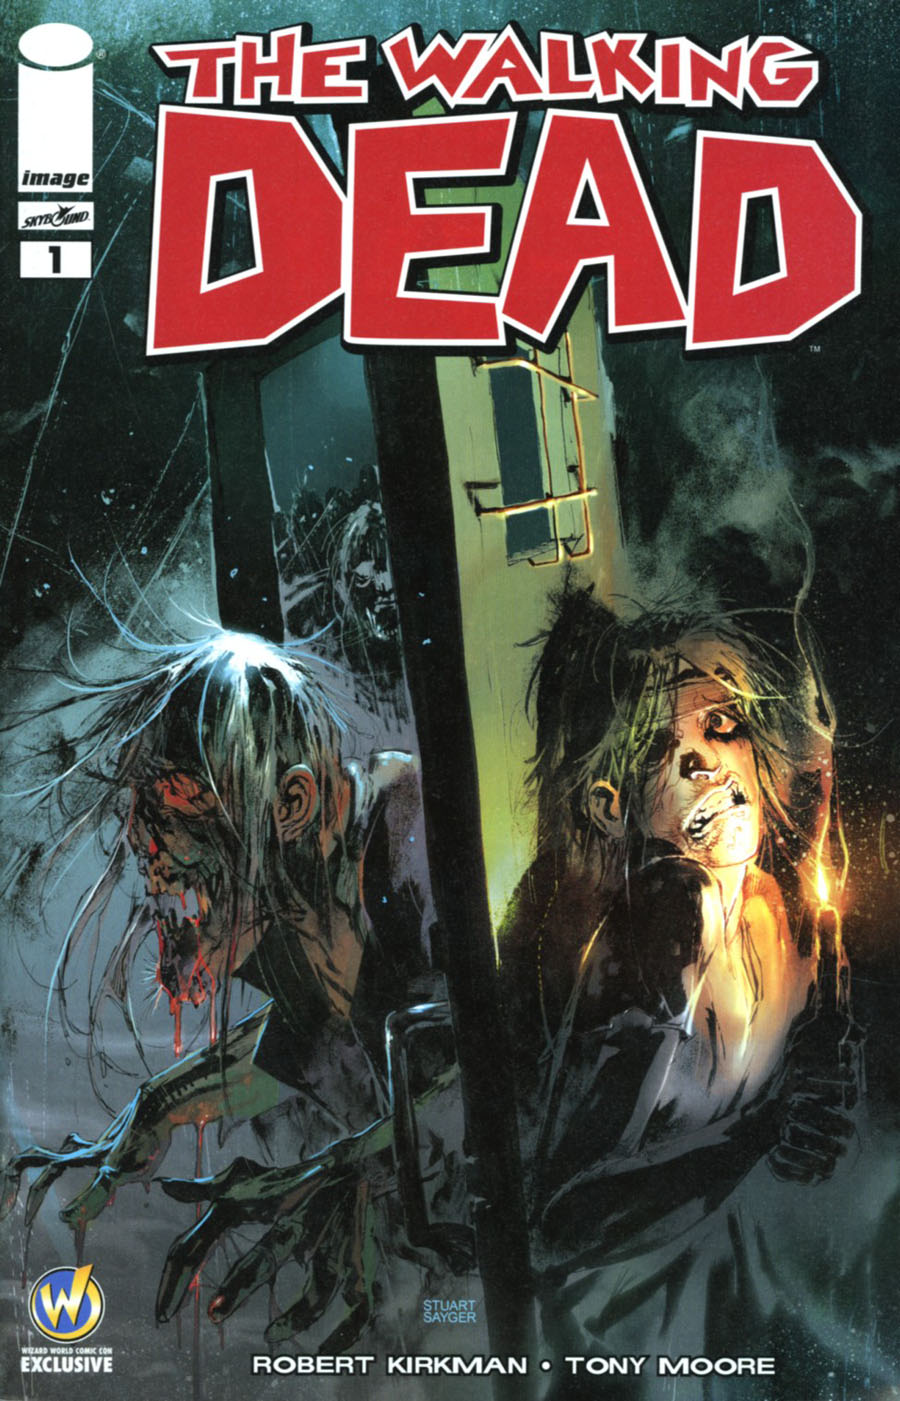 Walking Dead #1 Cover J Wizard World Comic Con Columbus Exclusive Stuart Sayger Color Variant Cover